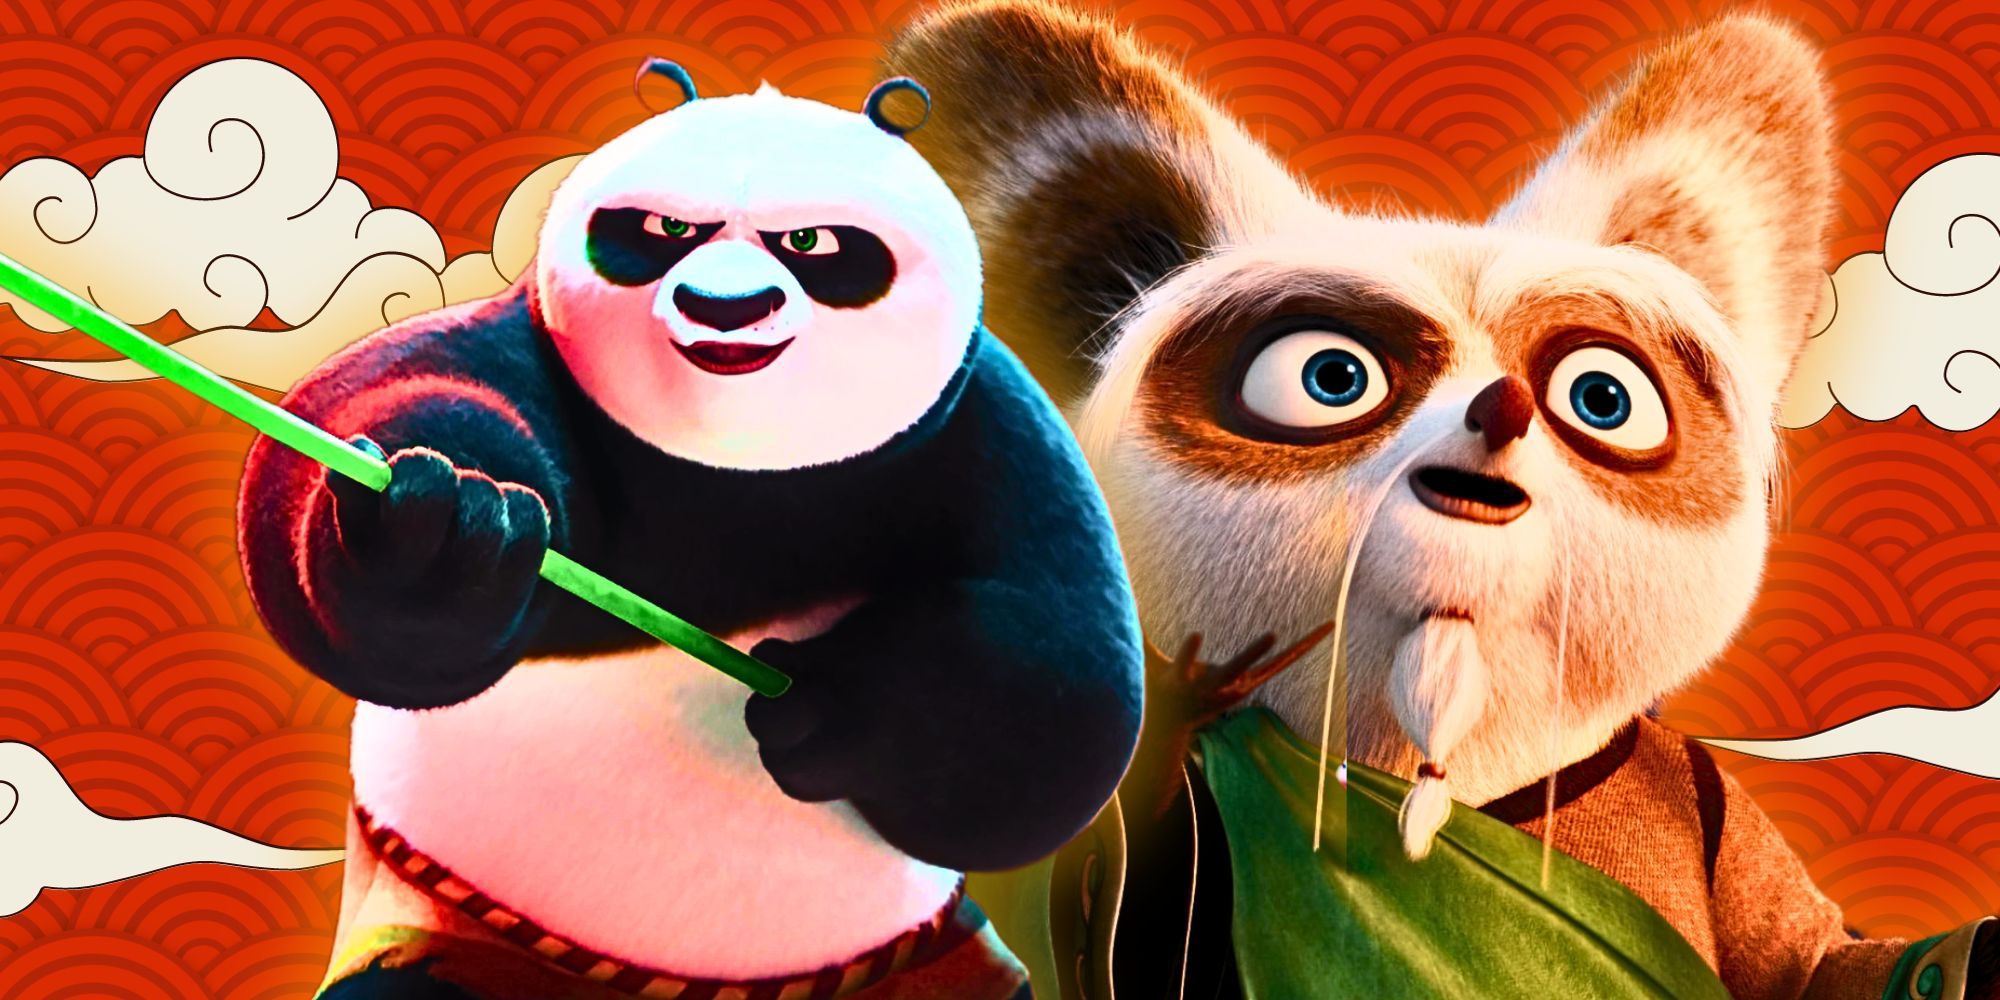 Po holding a staff and Master Shifu in Kung Fu Panda 4